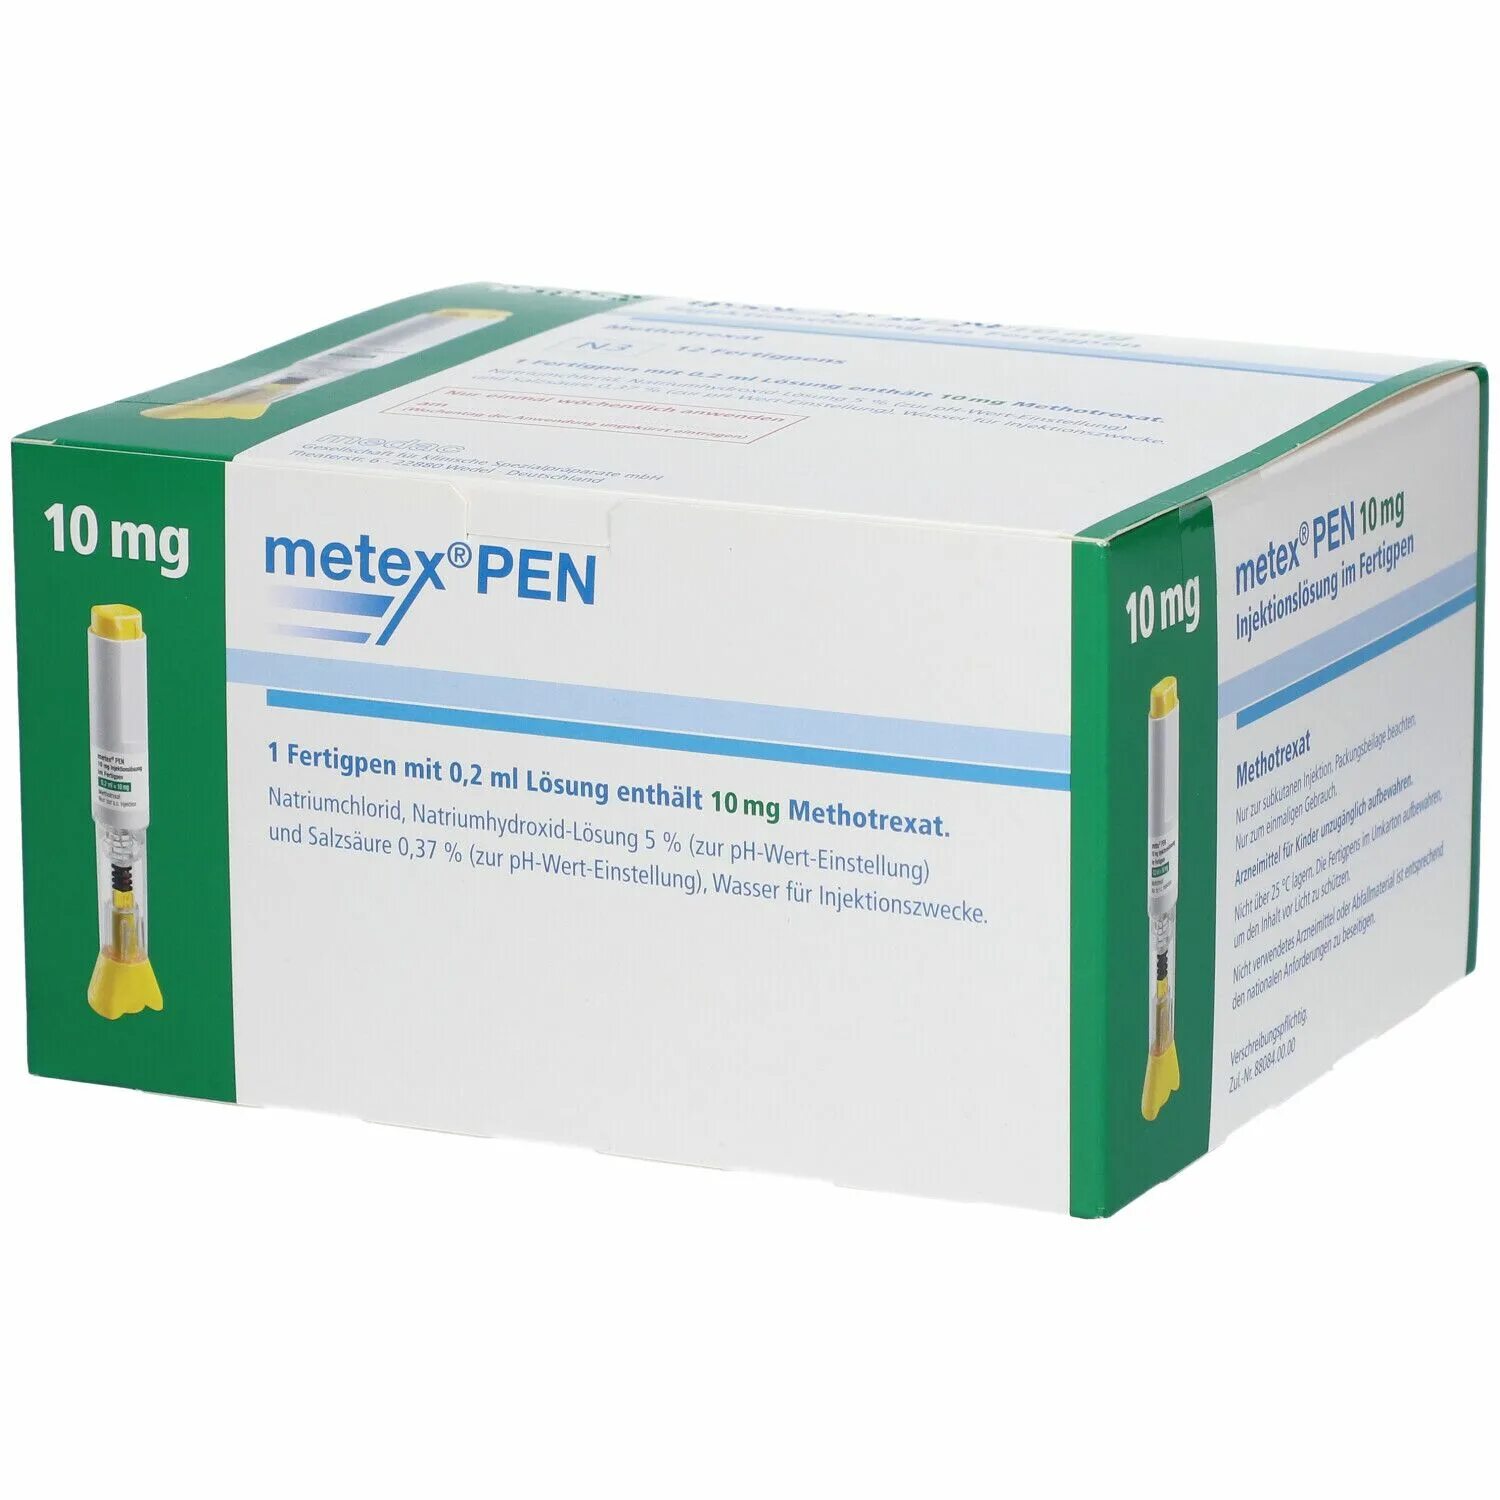 Metex Pen 15 MG. Уколы Metex Pen 15mg. Метотрексат 10 мг шприц ручка. Метотрексат 15 мг в шприце.